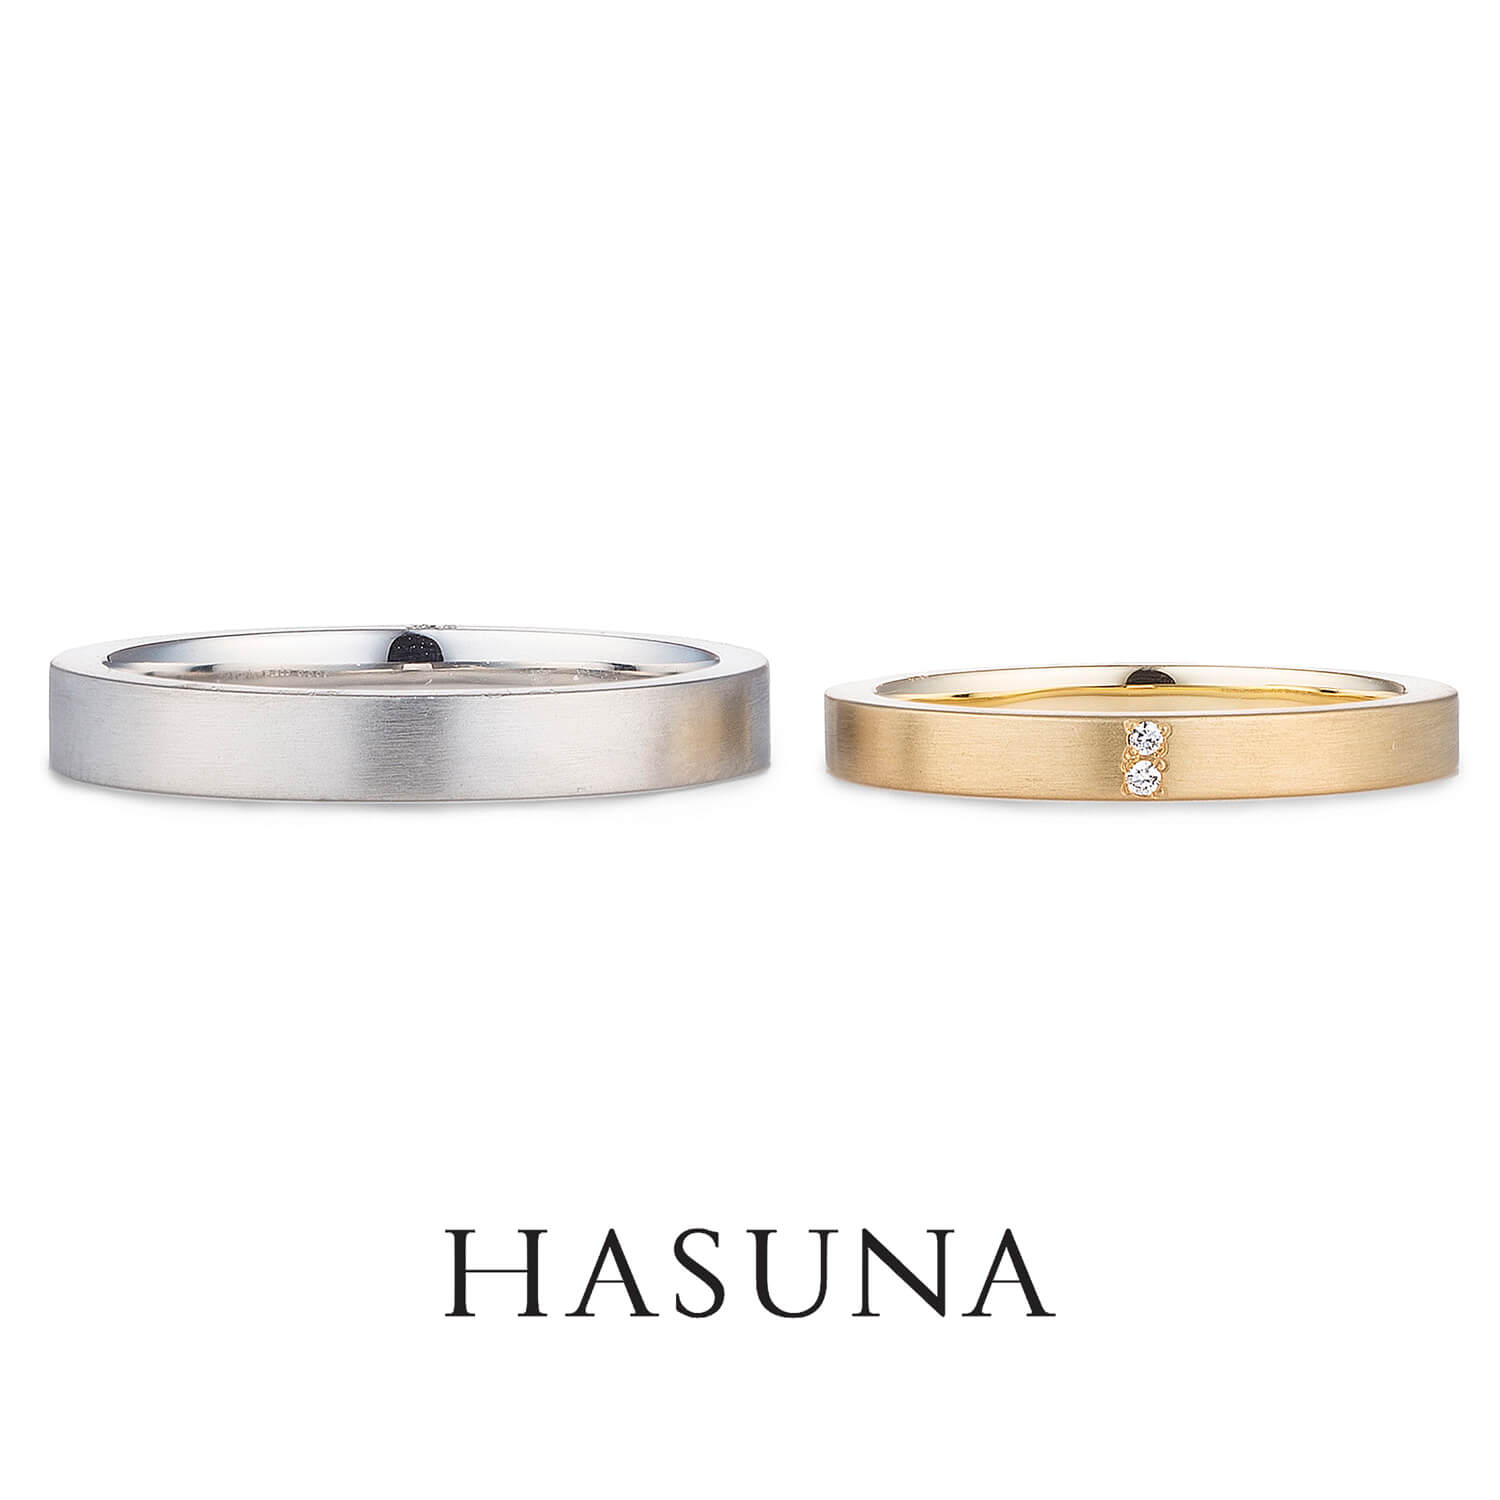 HASUNAハスナの結婚指輪MR27とMR26